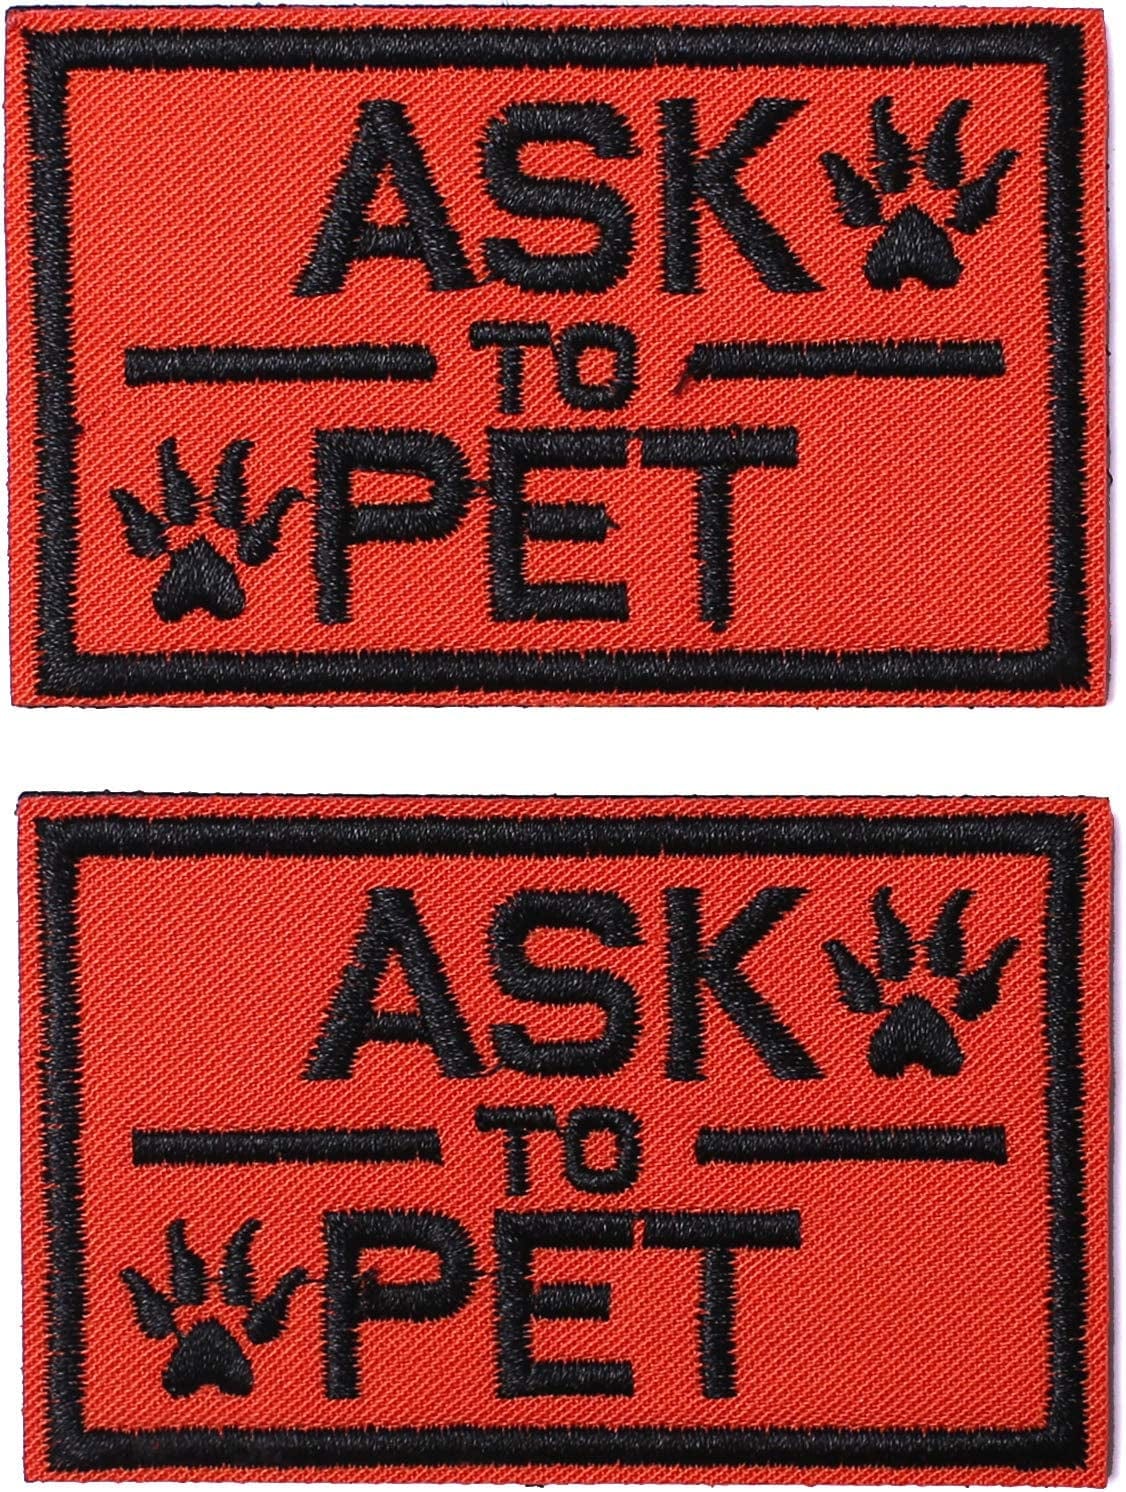 Hot Selling PET Patch Laser Cutting ASK TO PET Luminous PET Strap Sticker  Service Dog K9 Badge IR Reflective Badge Hook Patch - AliExpress